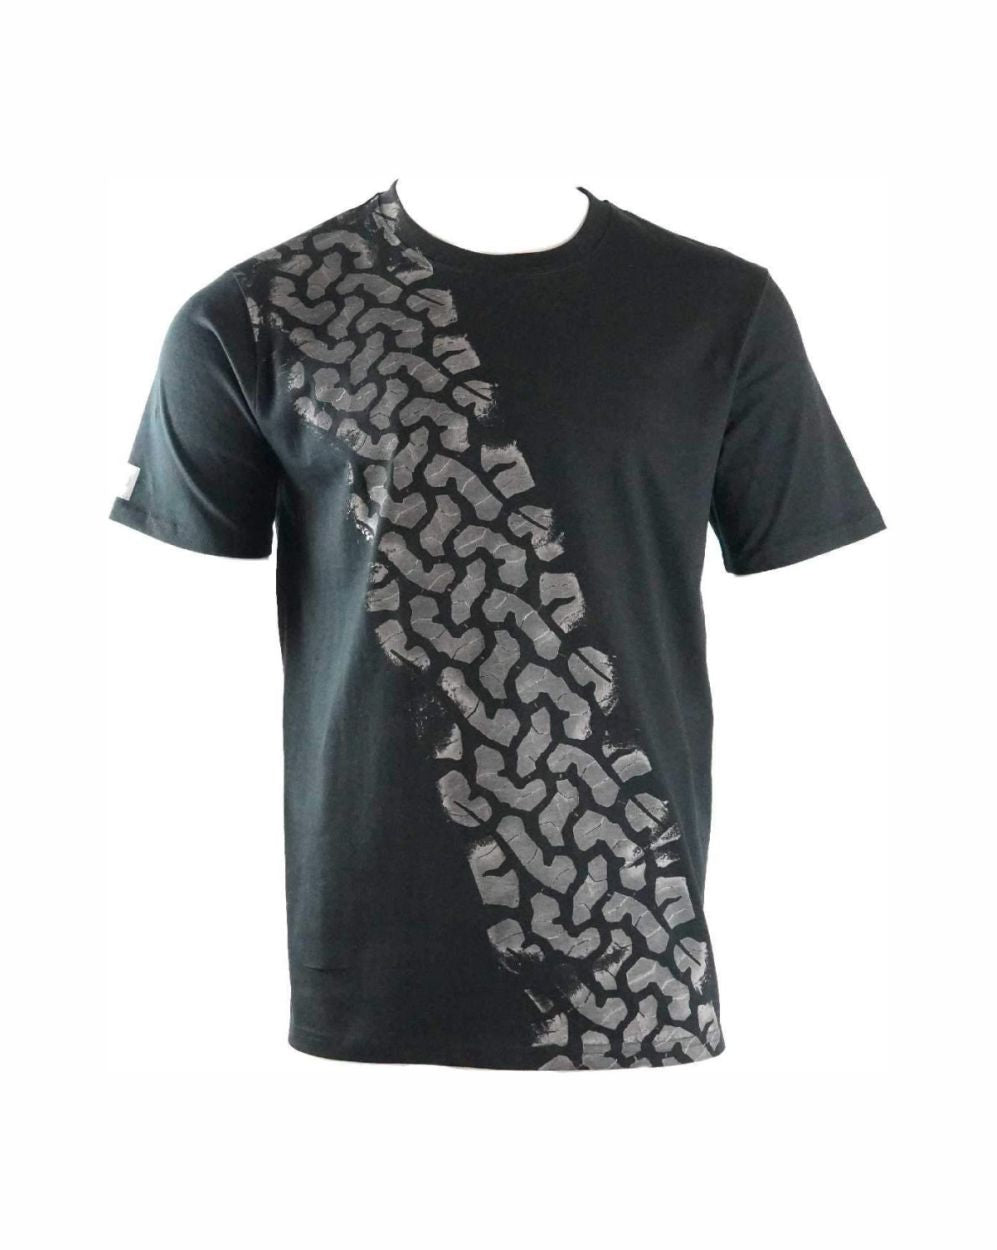 All Terrain Reifendruck limited Edition T-Shirt